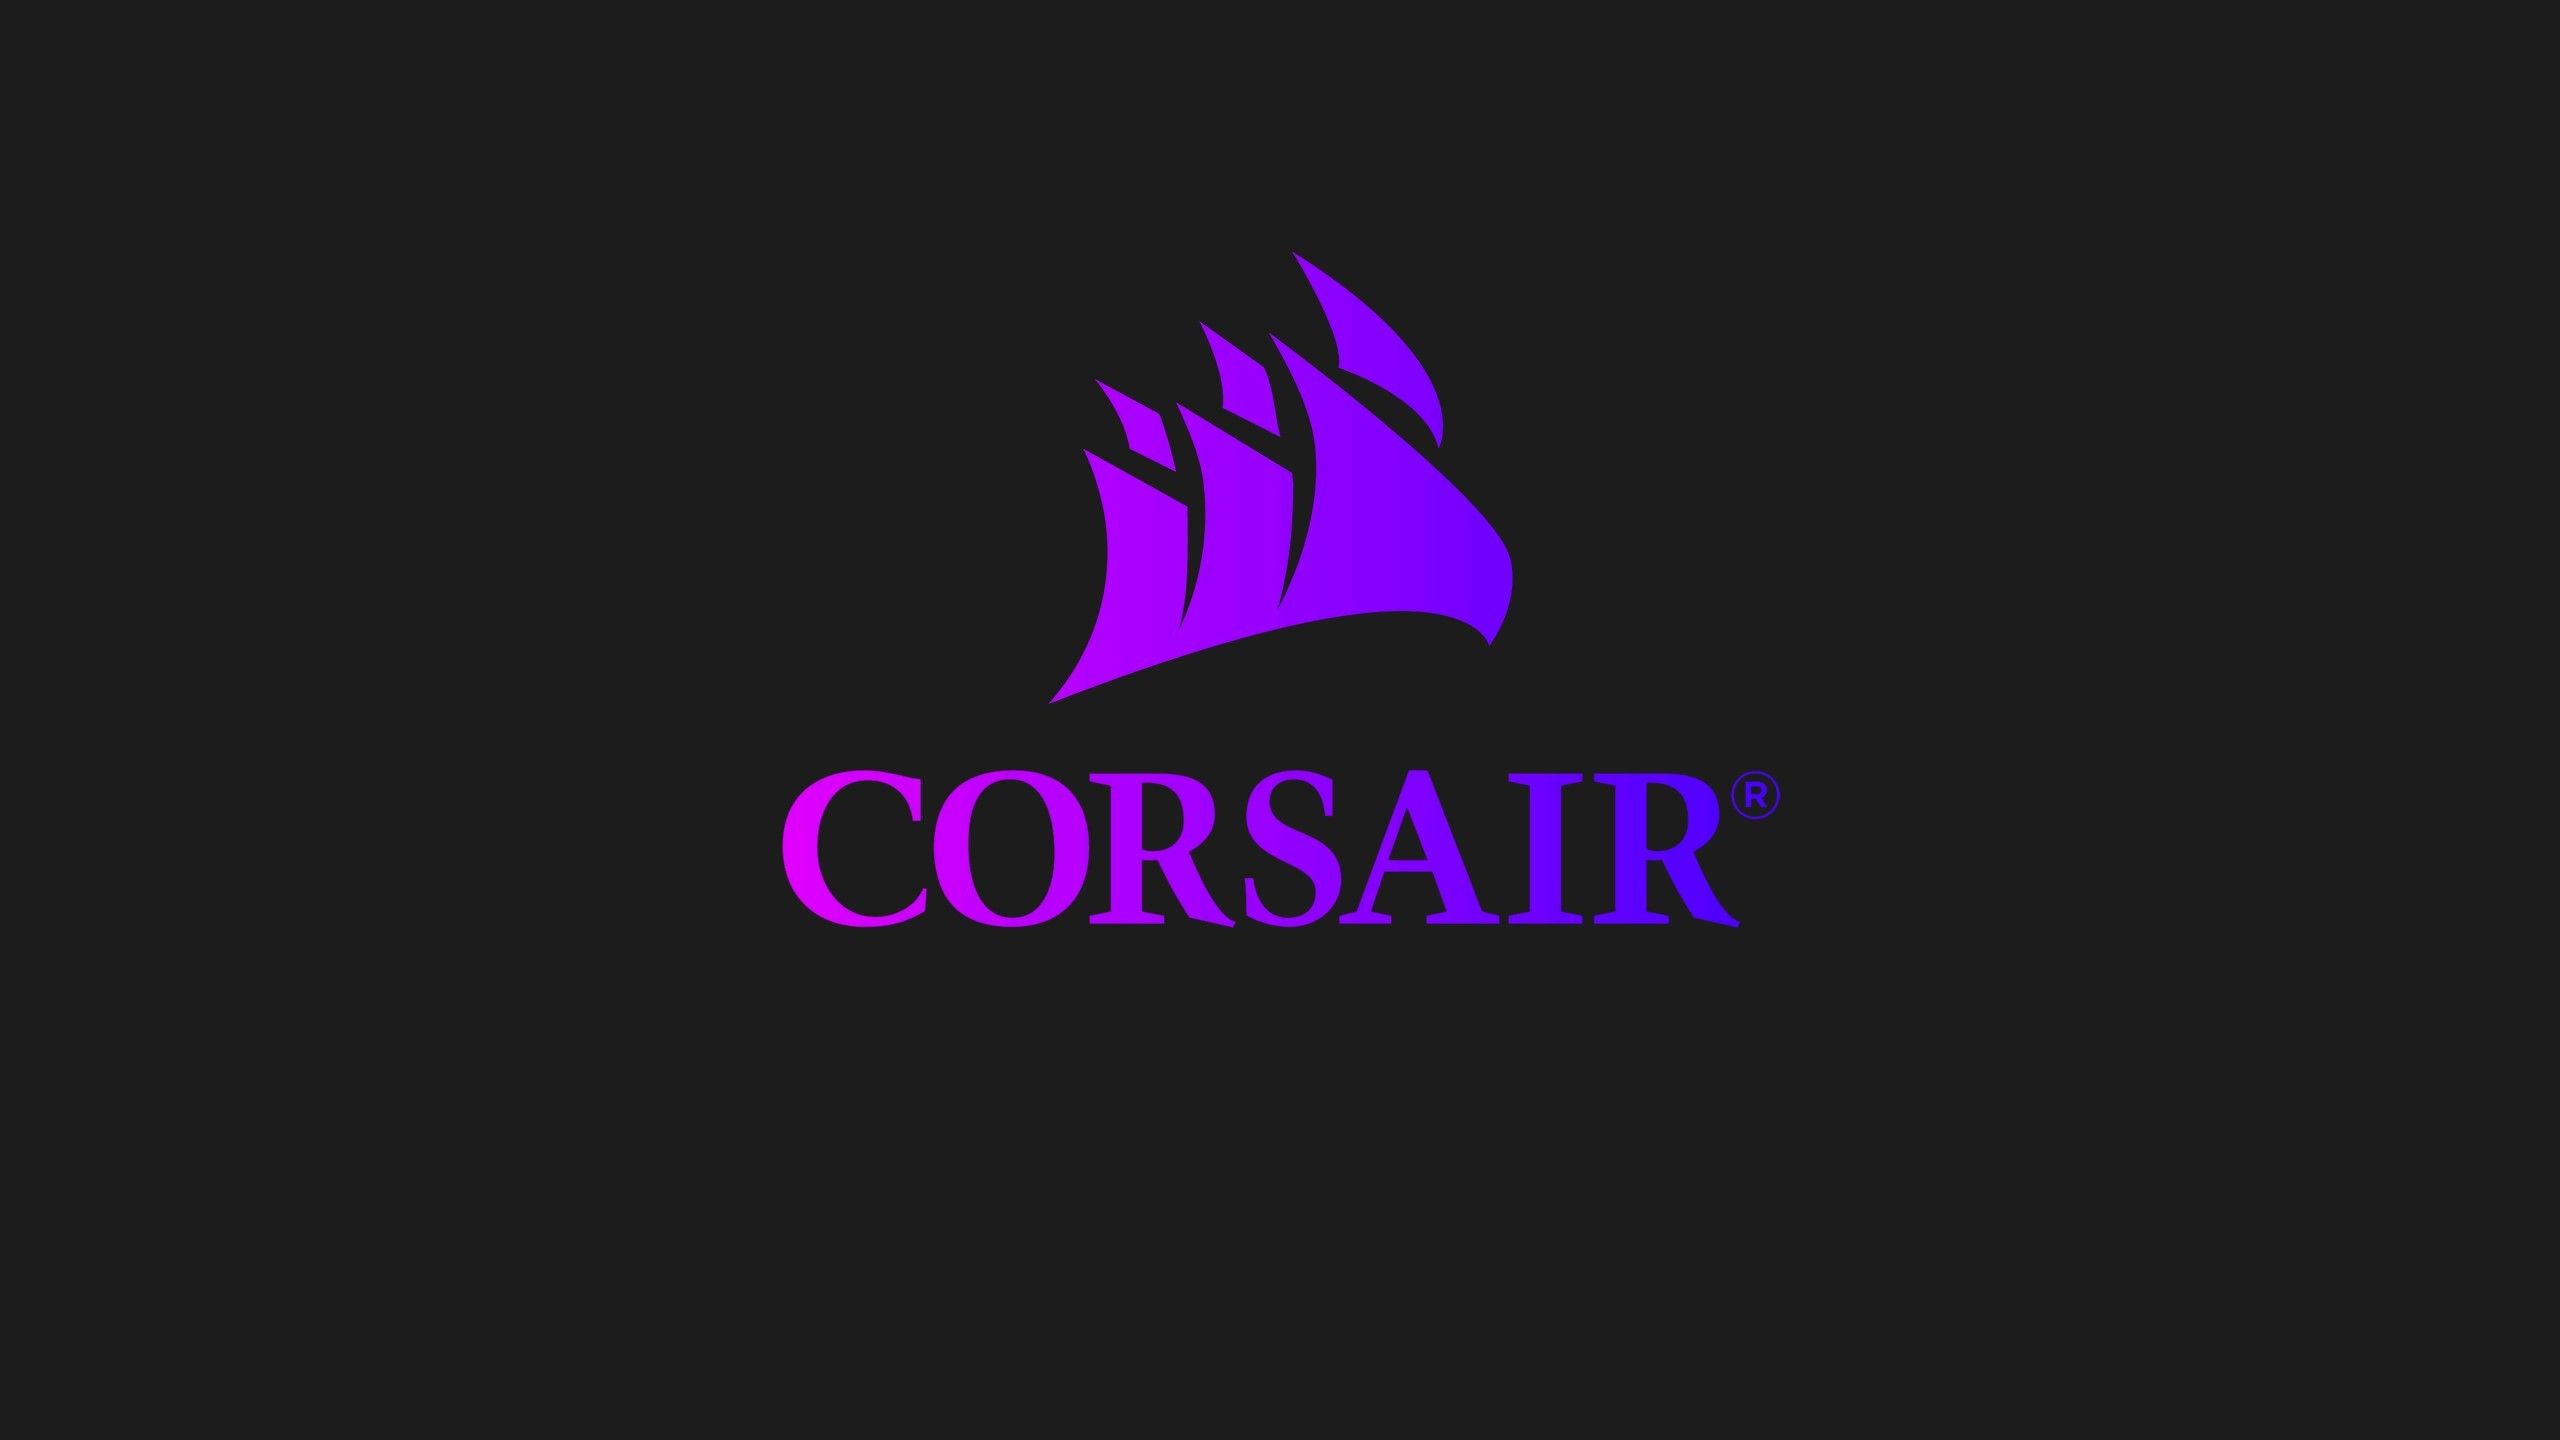 Corsair 2K Wallpaper